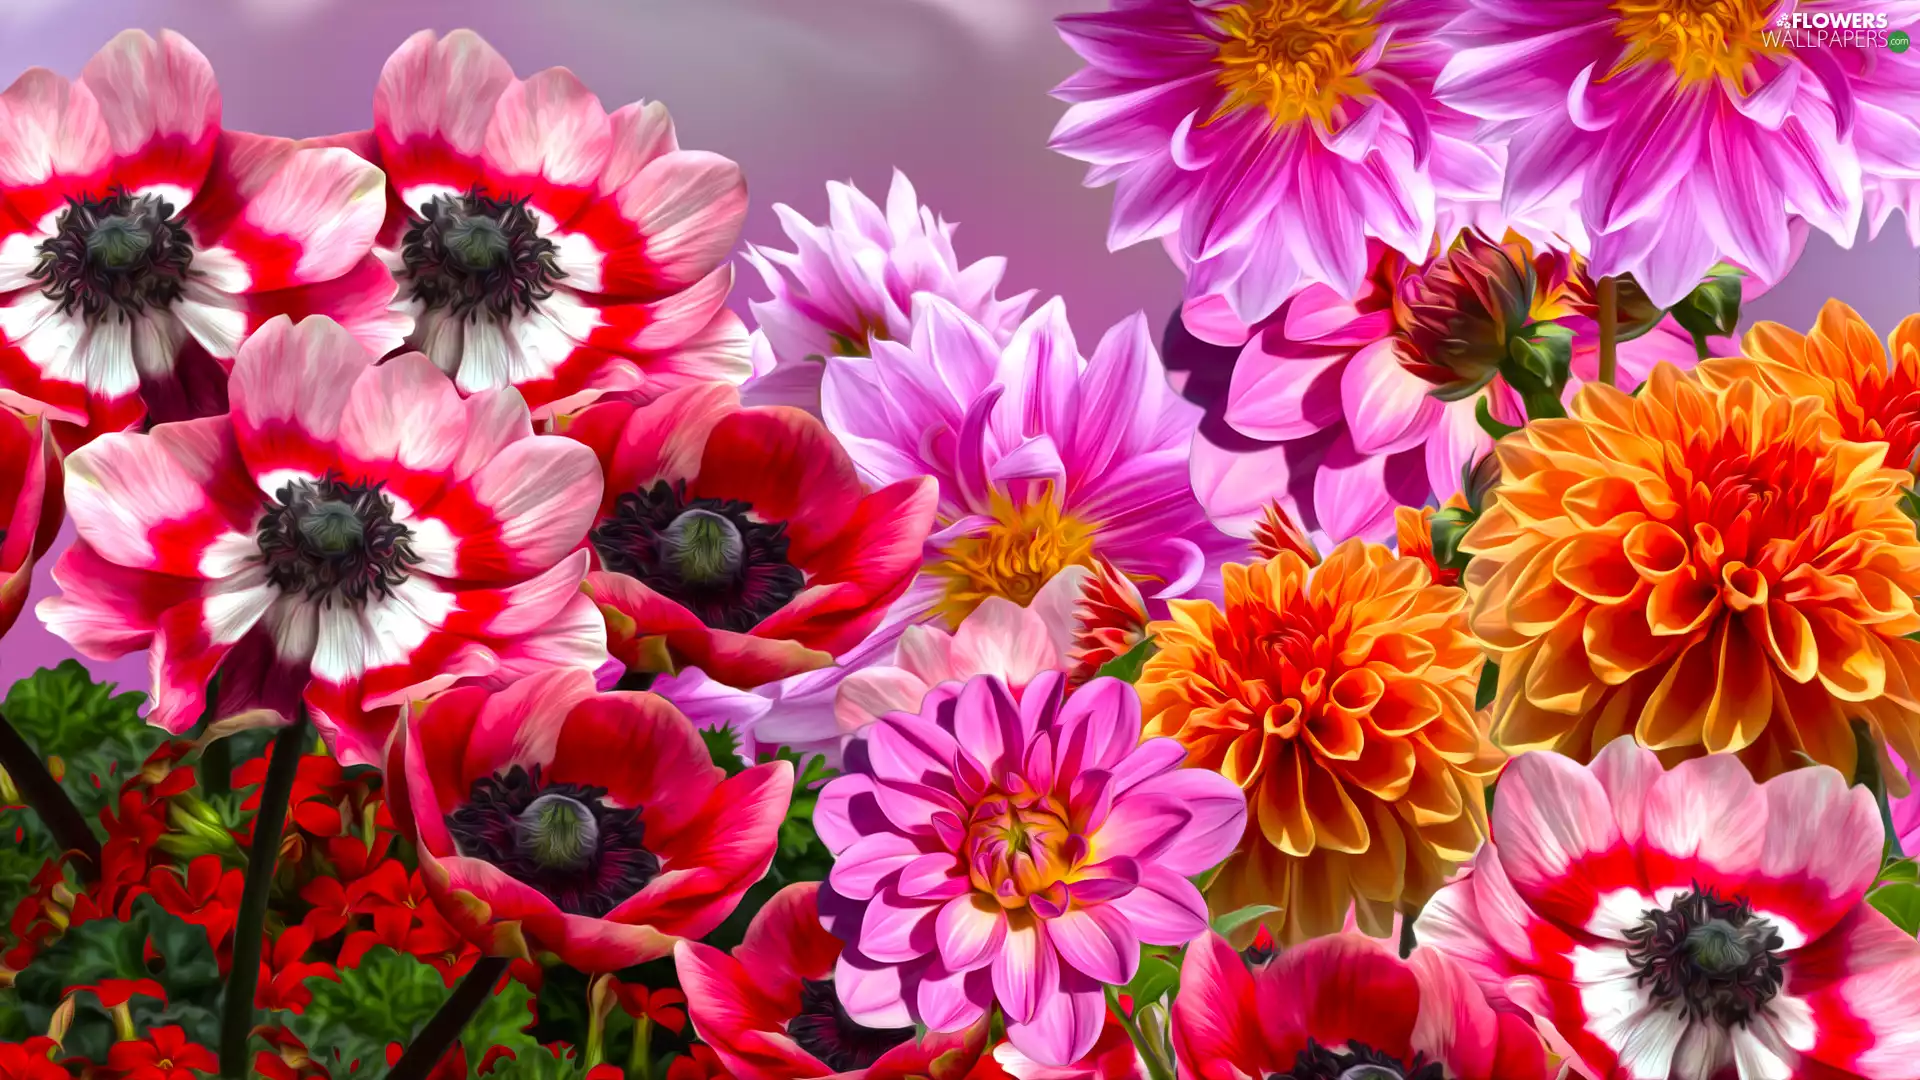 Flowers, Anemones, graphics, dahlias